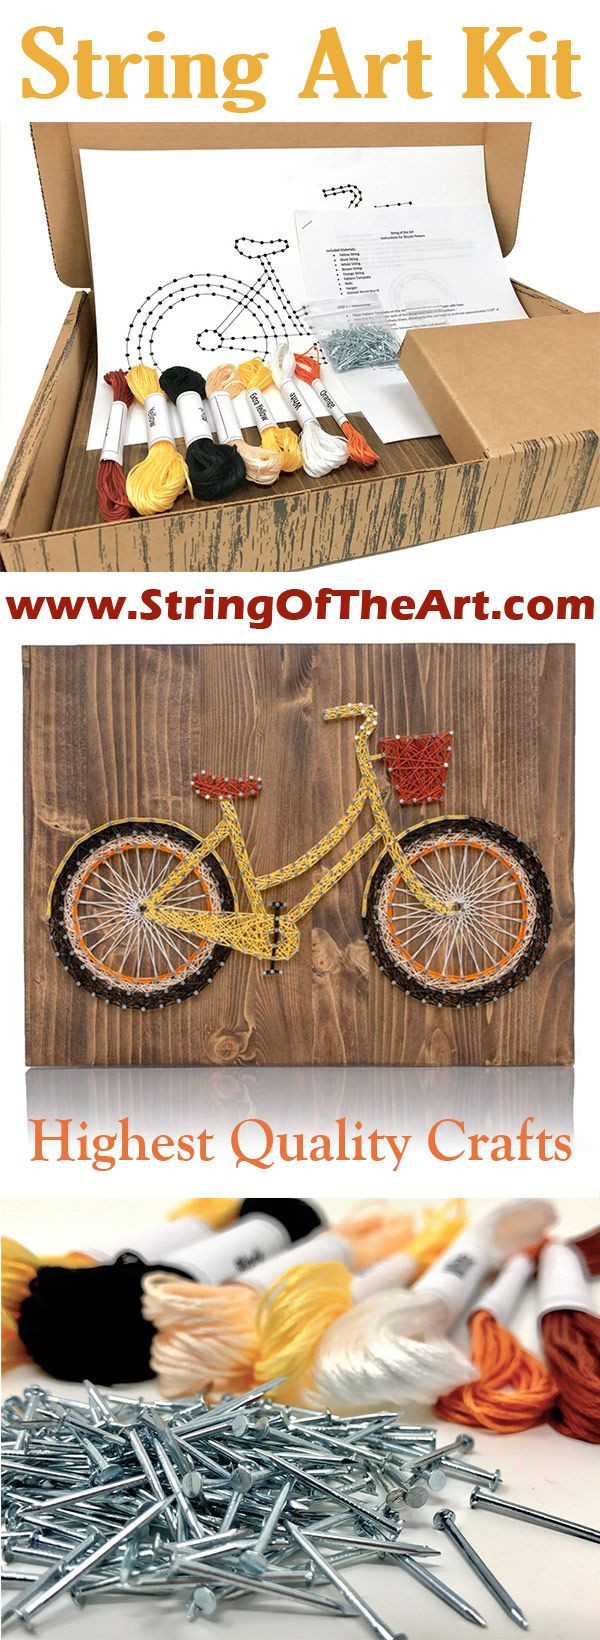 DIY String Art Kit
 114 best images about DIY String Art Kits on Pinterest